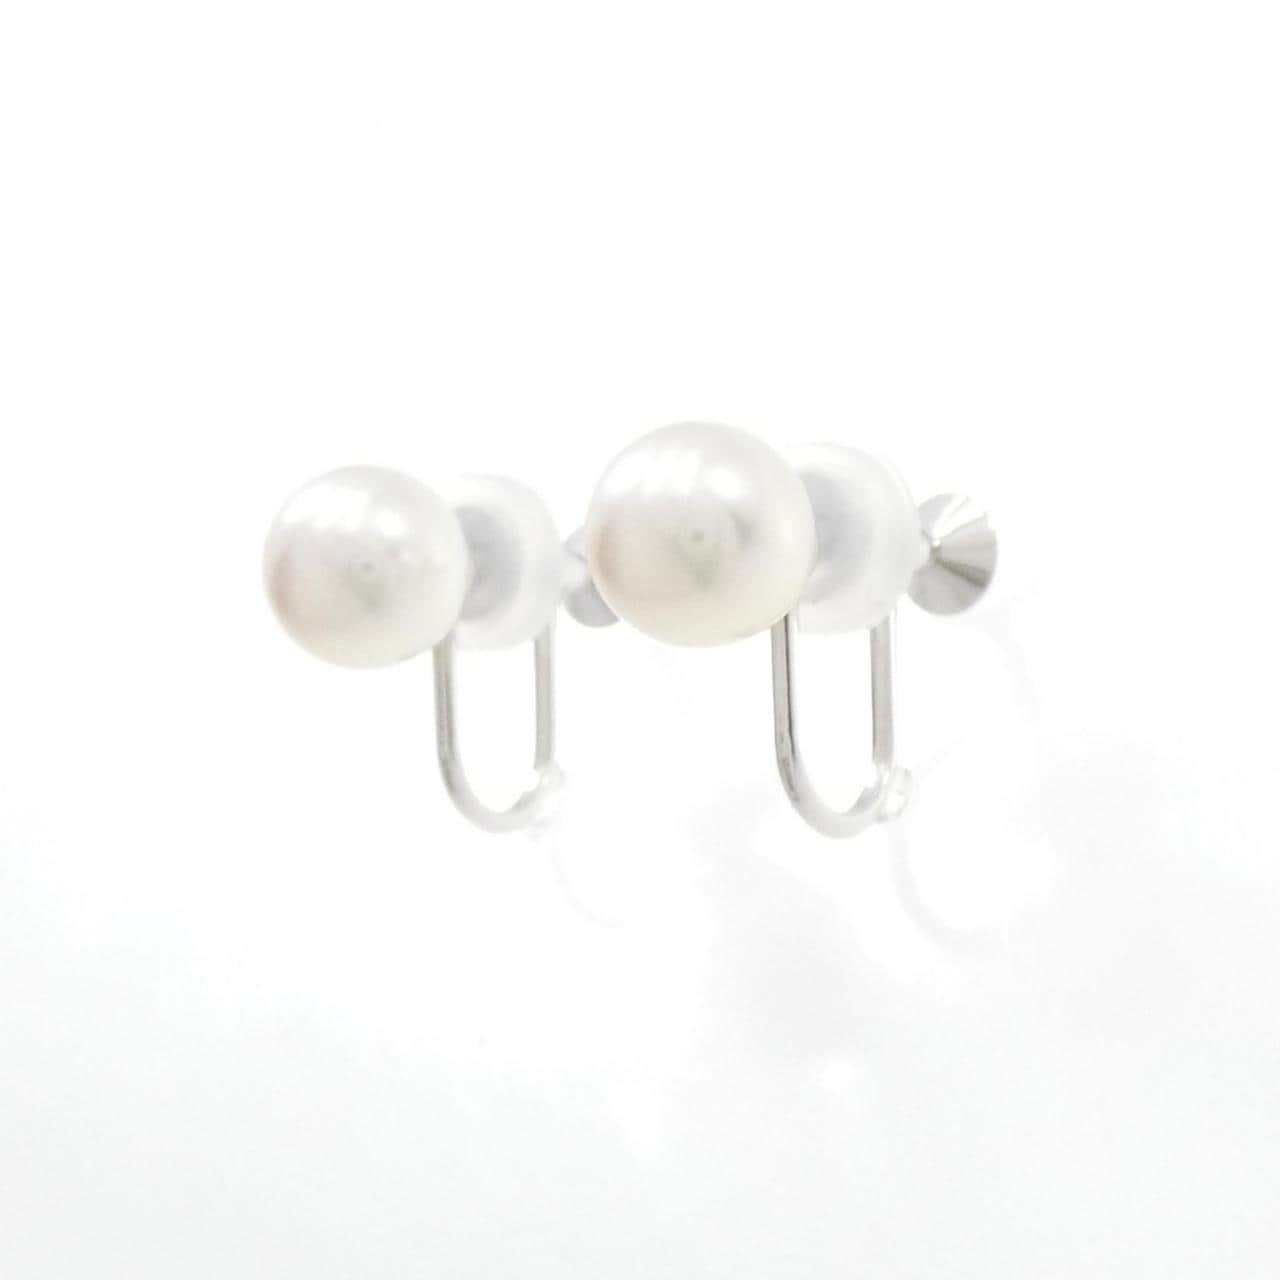 MIKIMOTO Akoya pearl necklace 7.5-8mm earring set